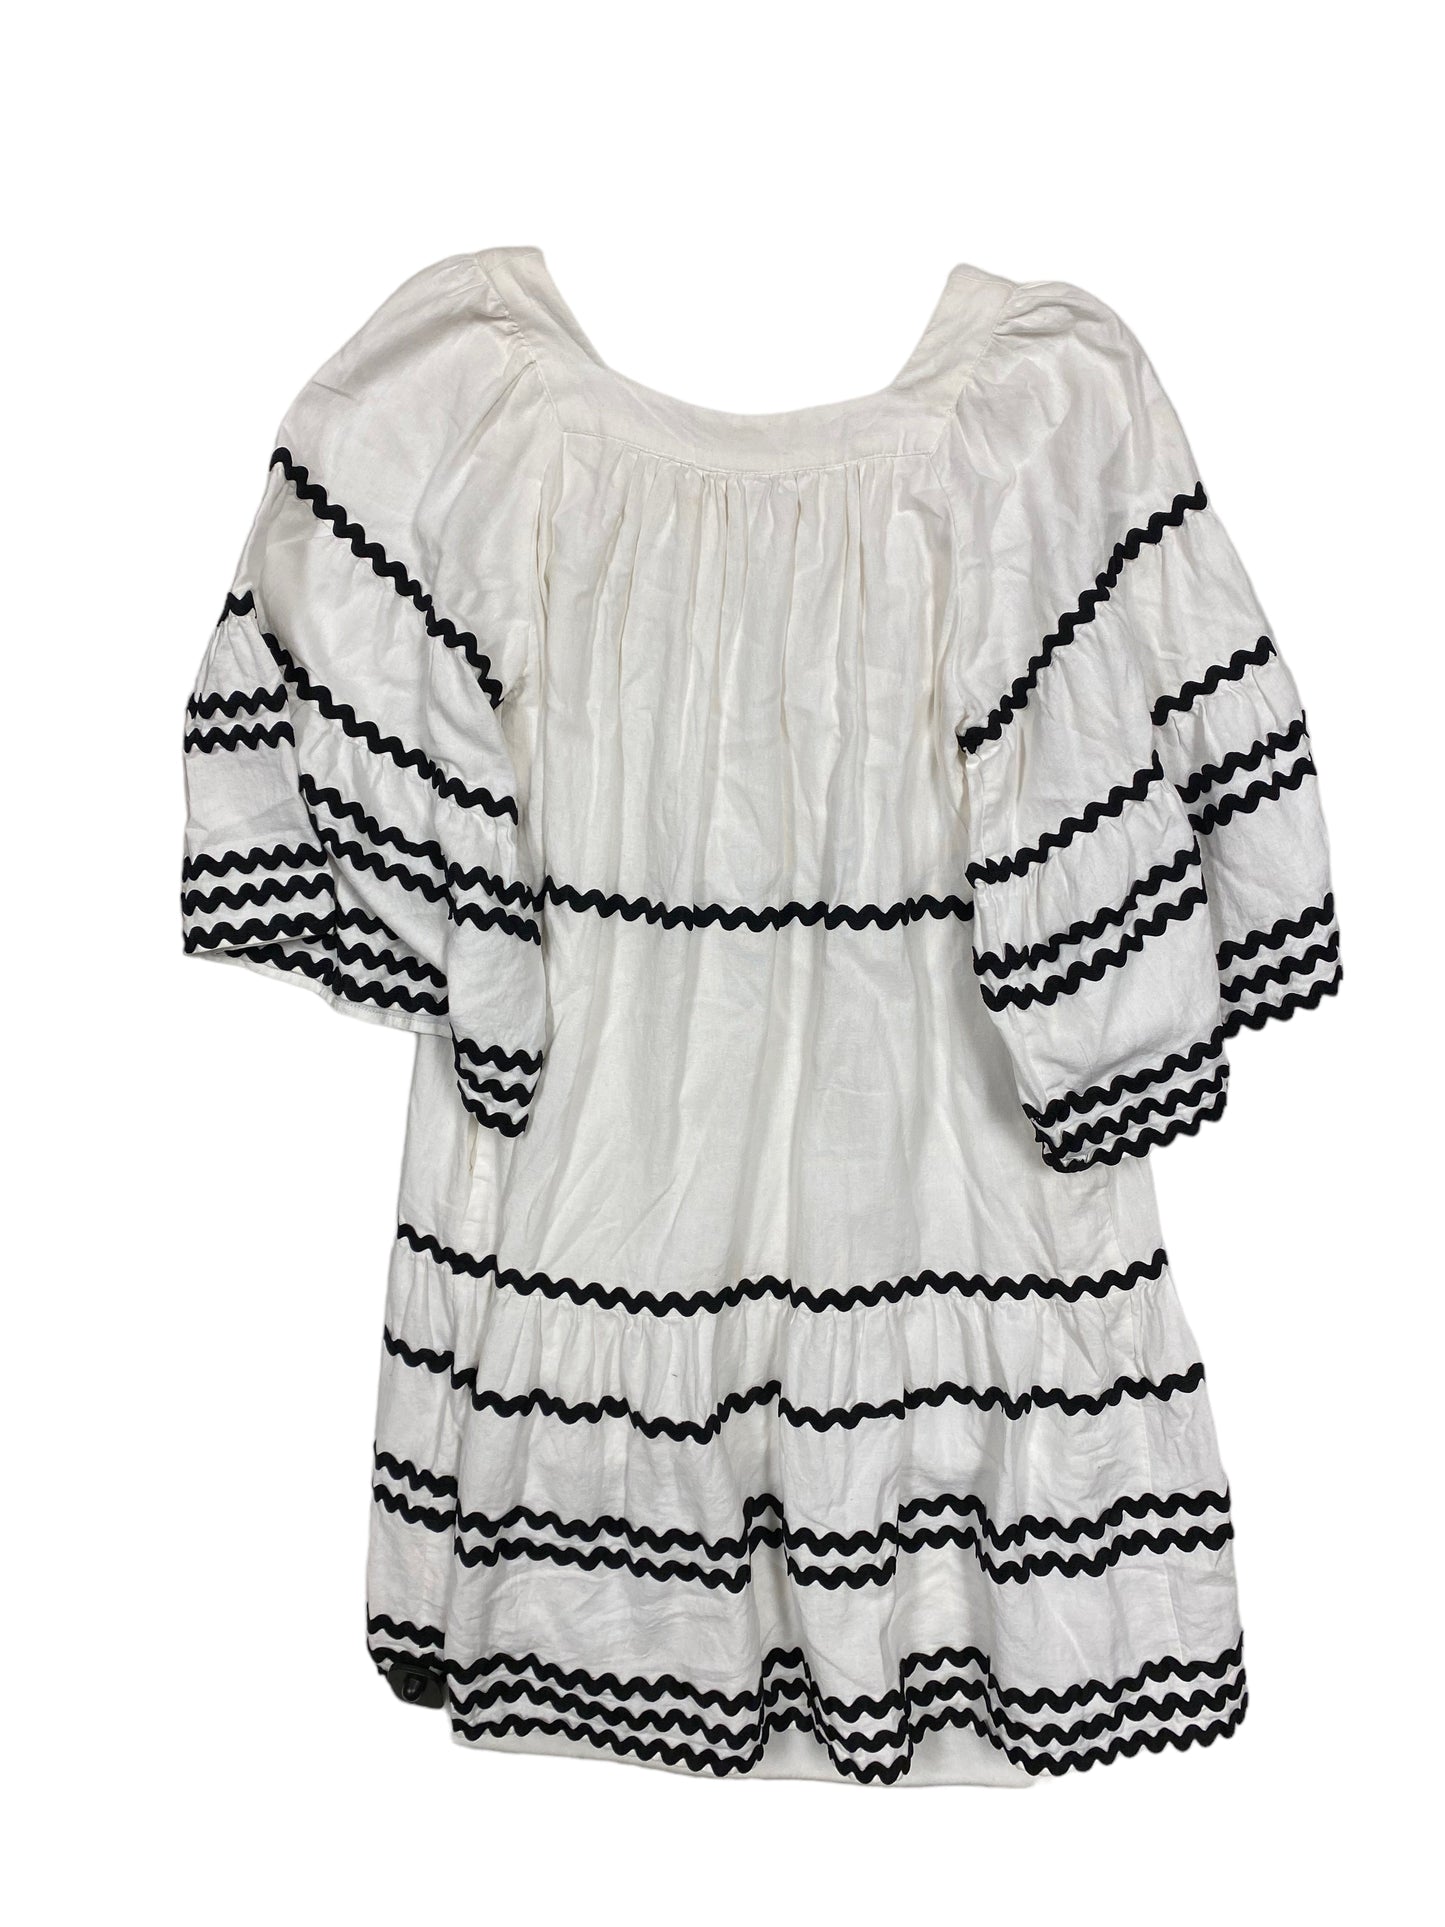 Black & White Dress Party Midi Target-designer, Size M